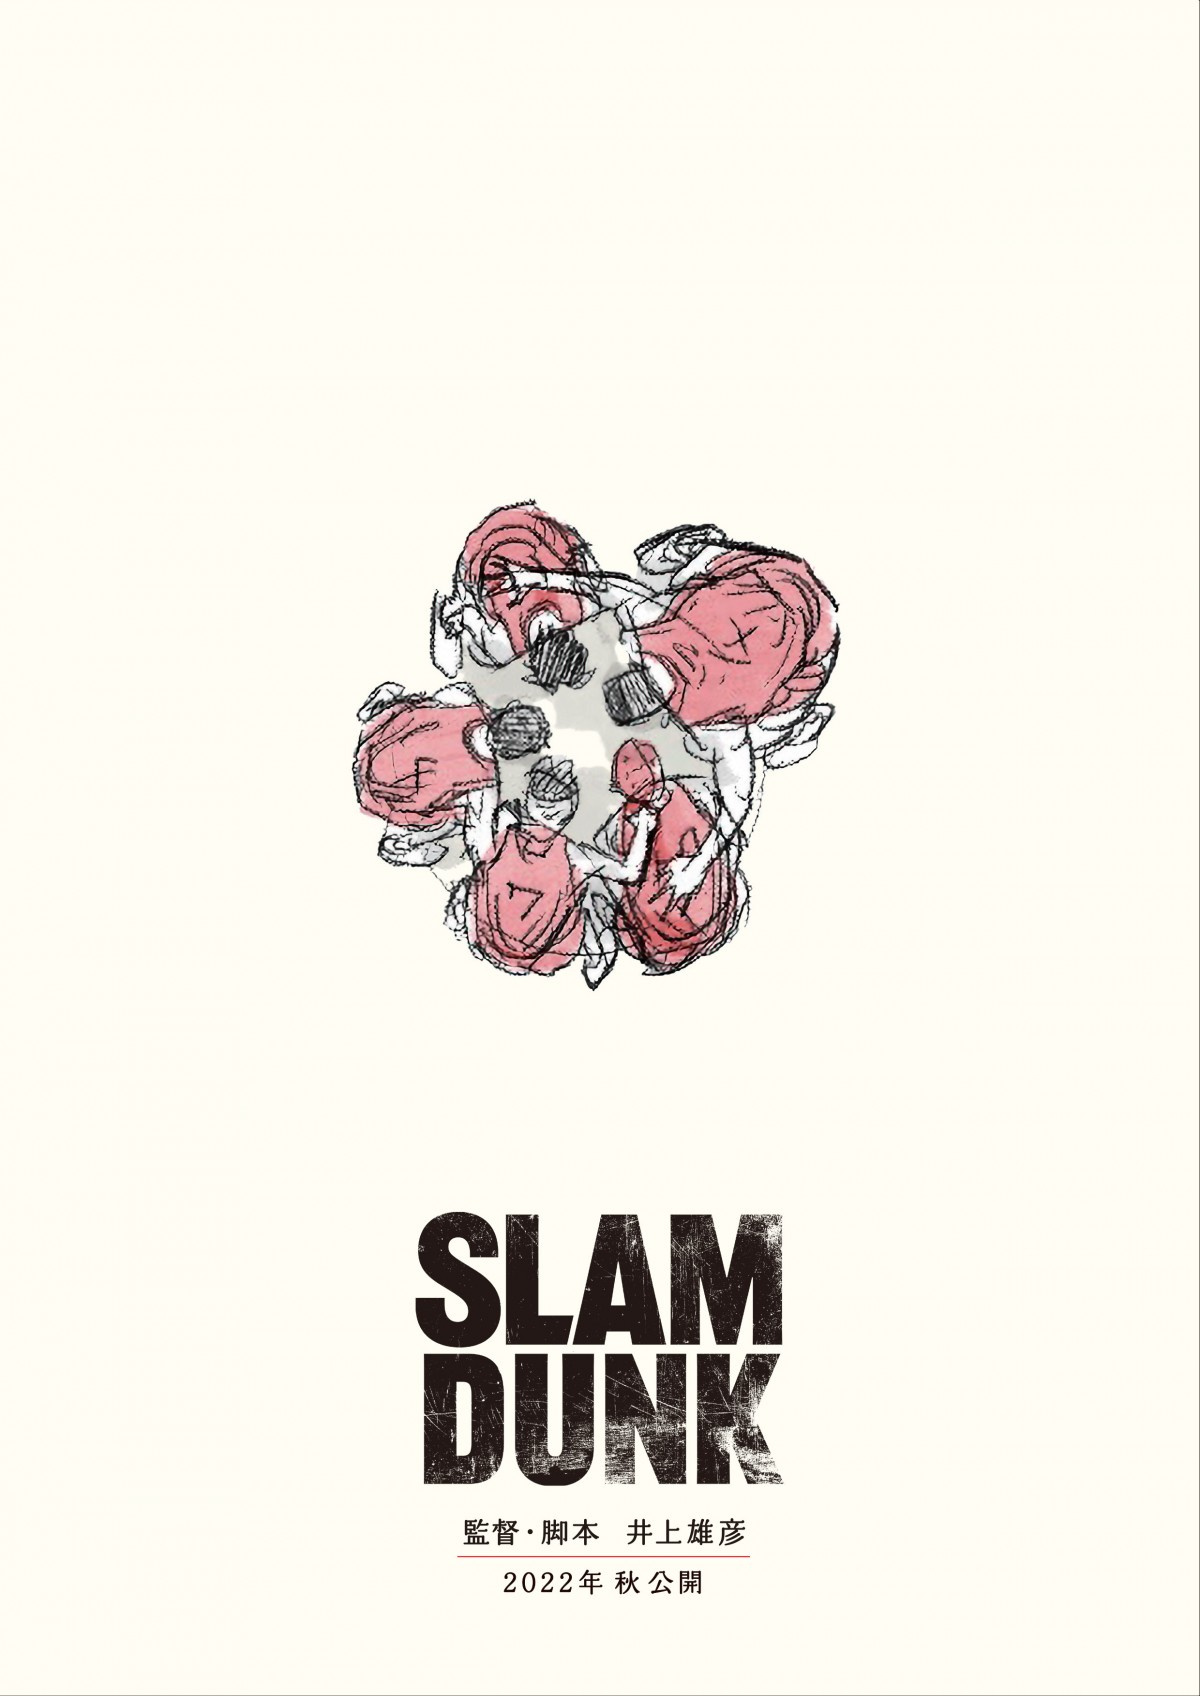 Slamdunk 新作映画のティザービジュアル公開 湘北メンバー5人が円陣 世界中から大反響 Oricon News